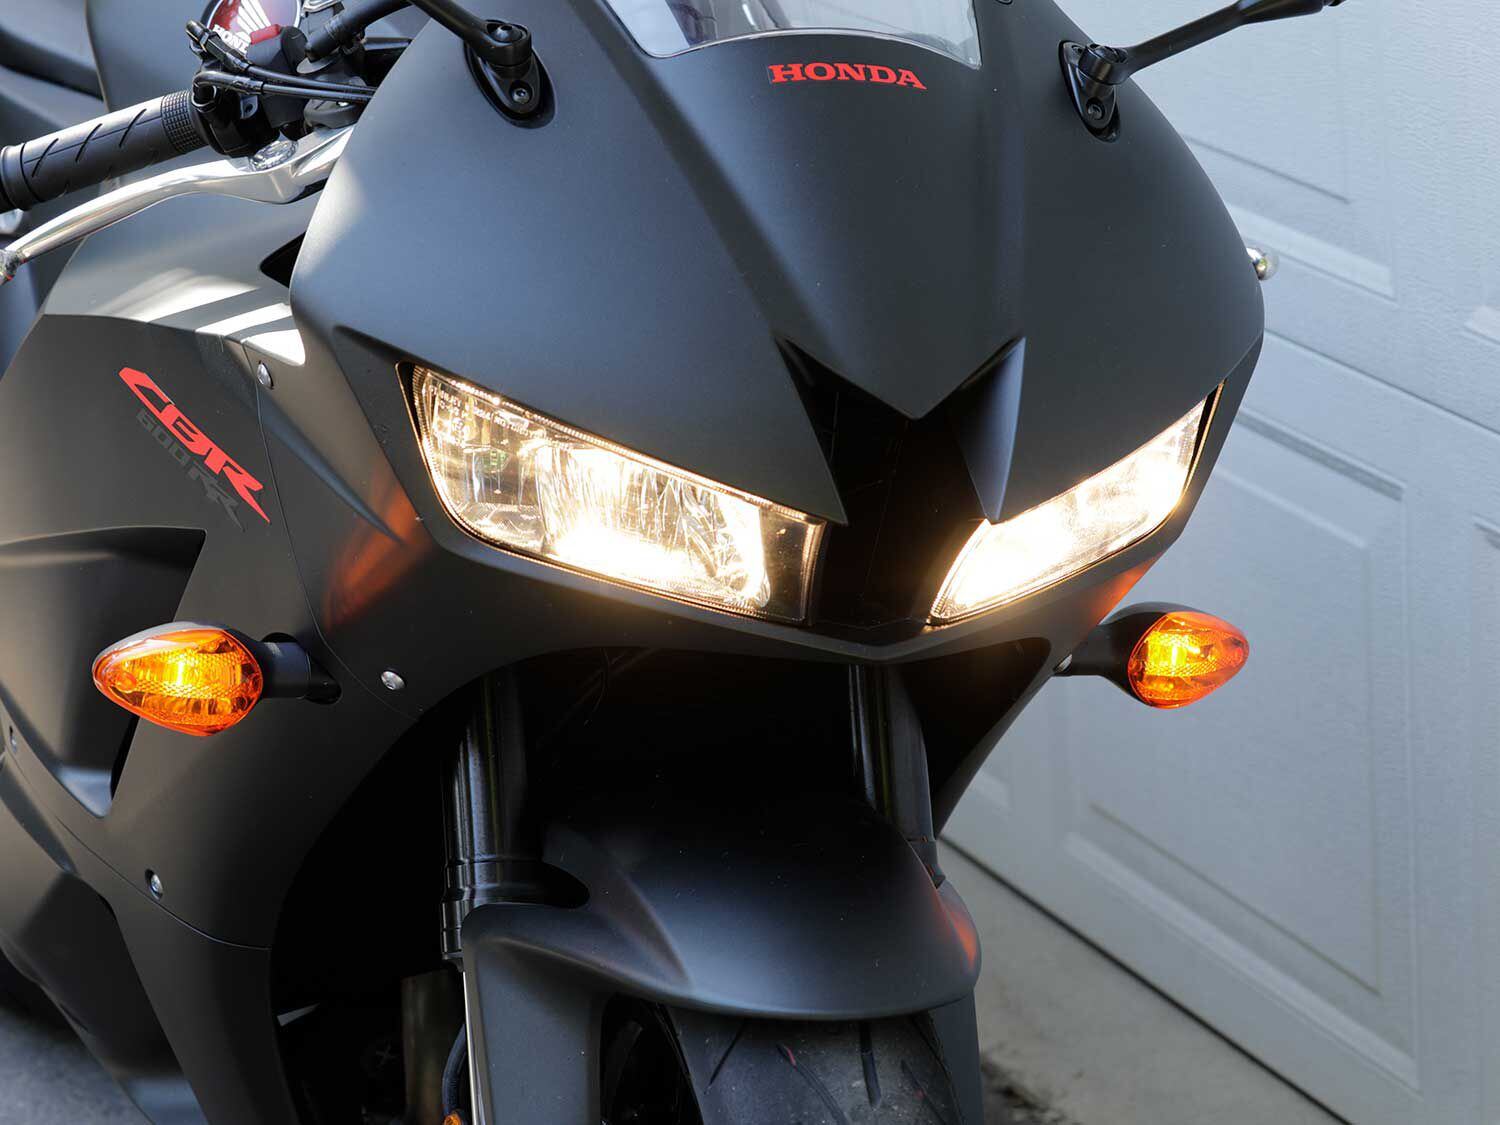 2020 Honda CBR600RR ABS MC Commute Review | Motorcycle News